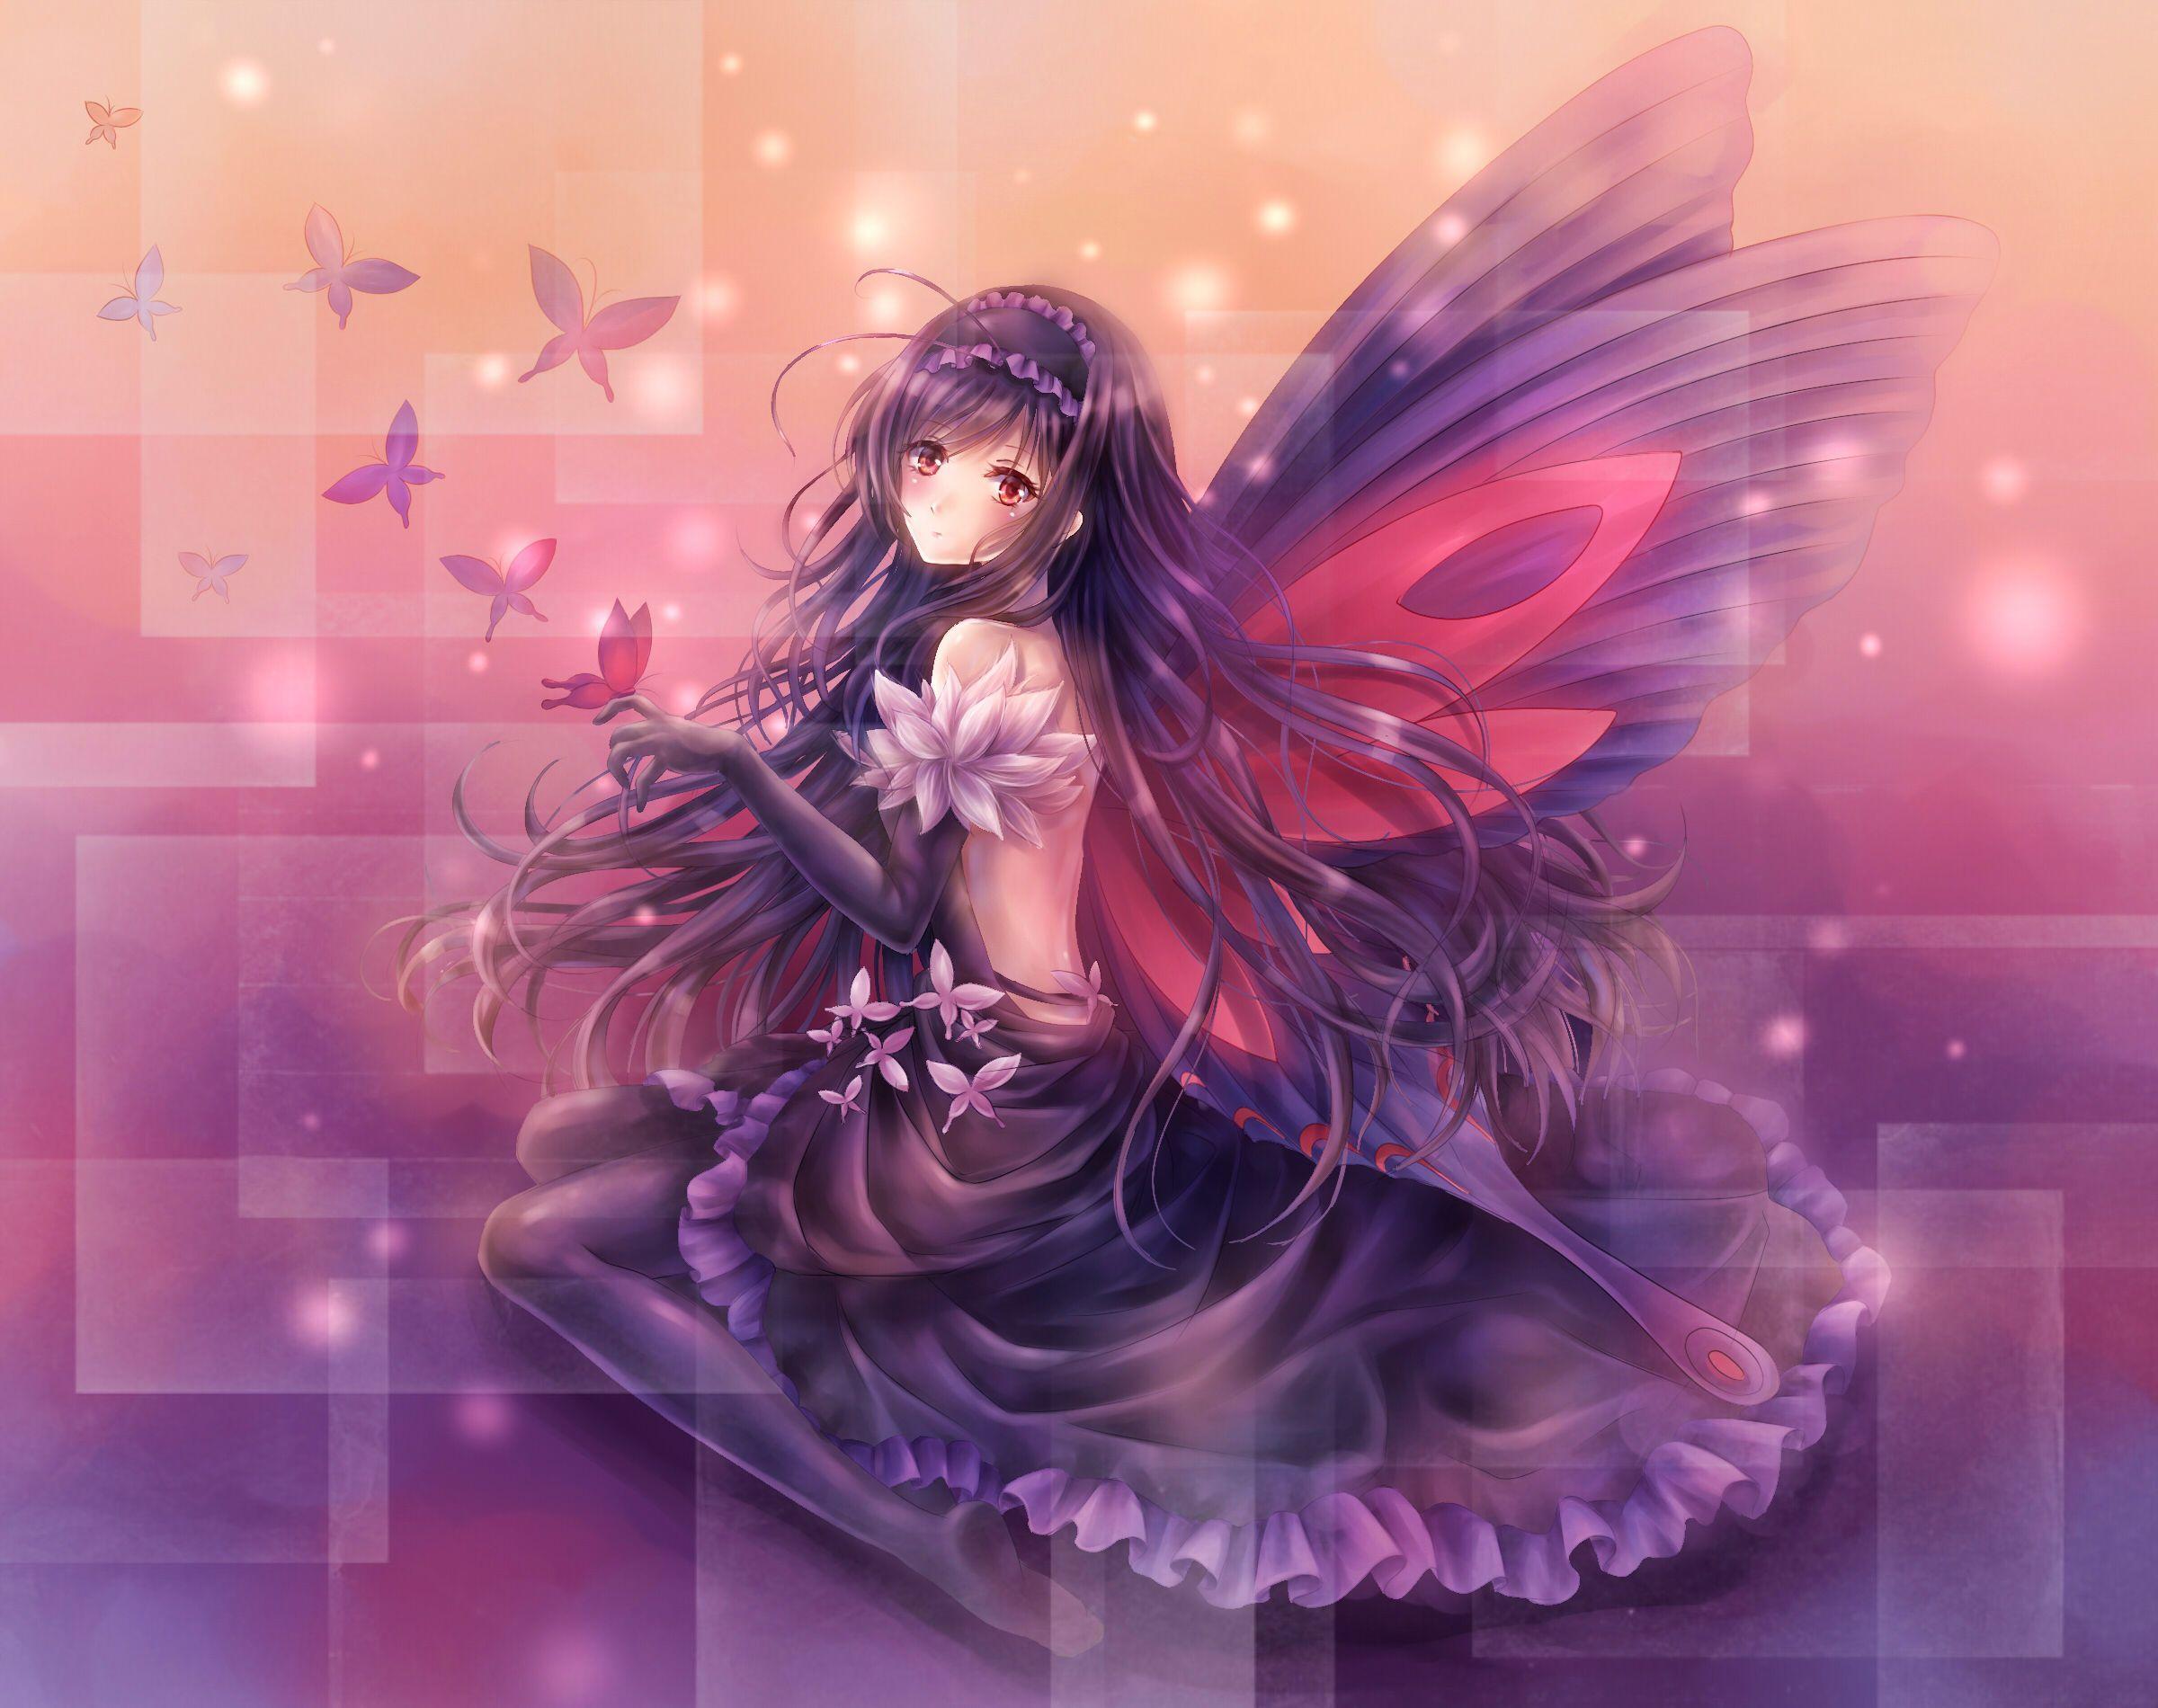 HD wallpaper: Anime Fairies, female anime character illustration, Artistic  | Wallpaper Flare